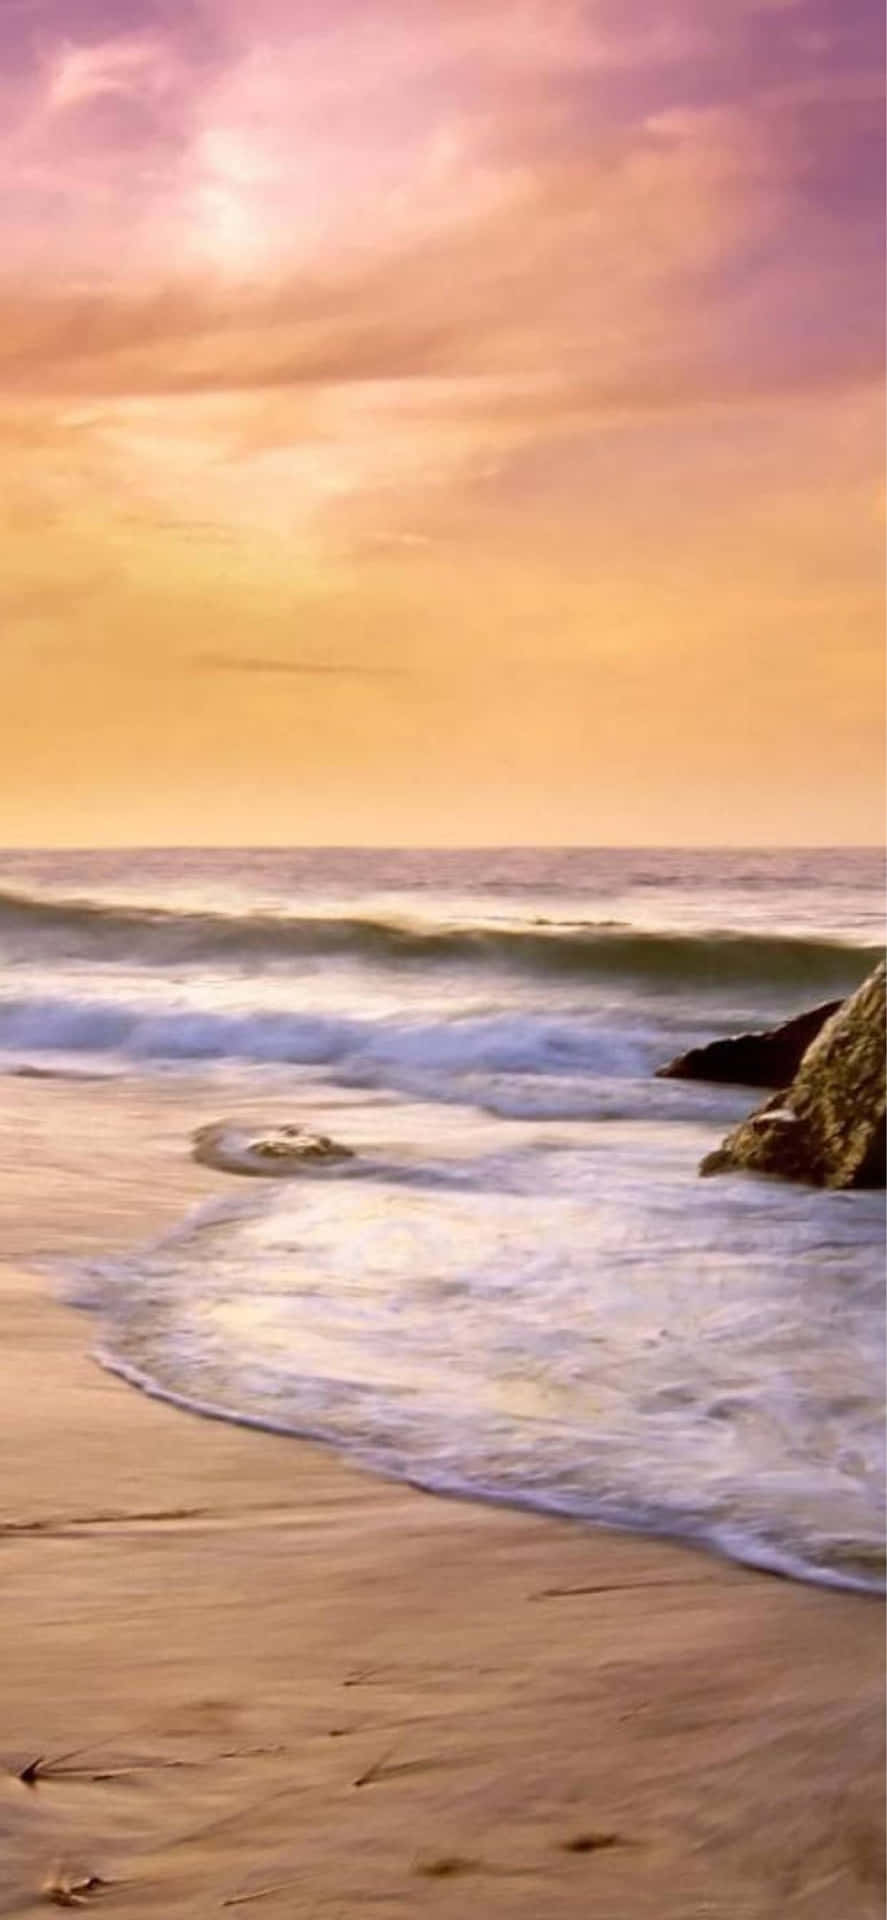 Iphone Xs Max Malibu Ocean Side Sunset Sky Background